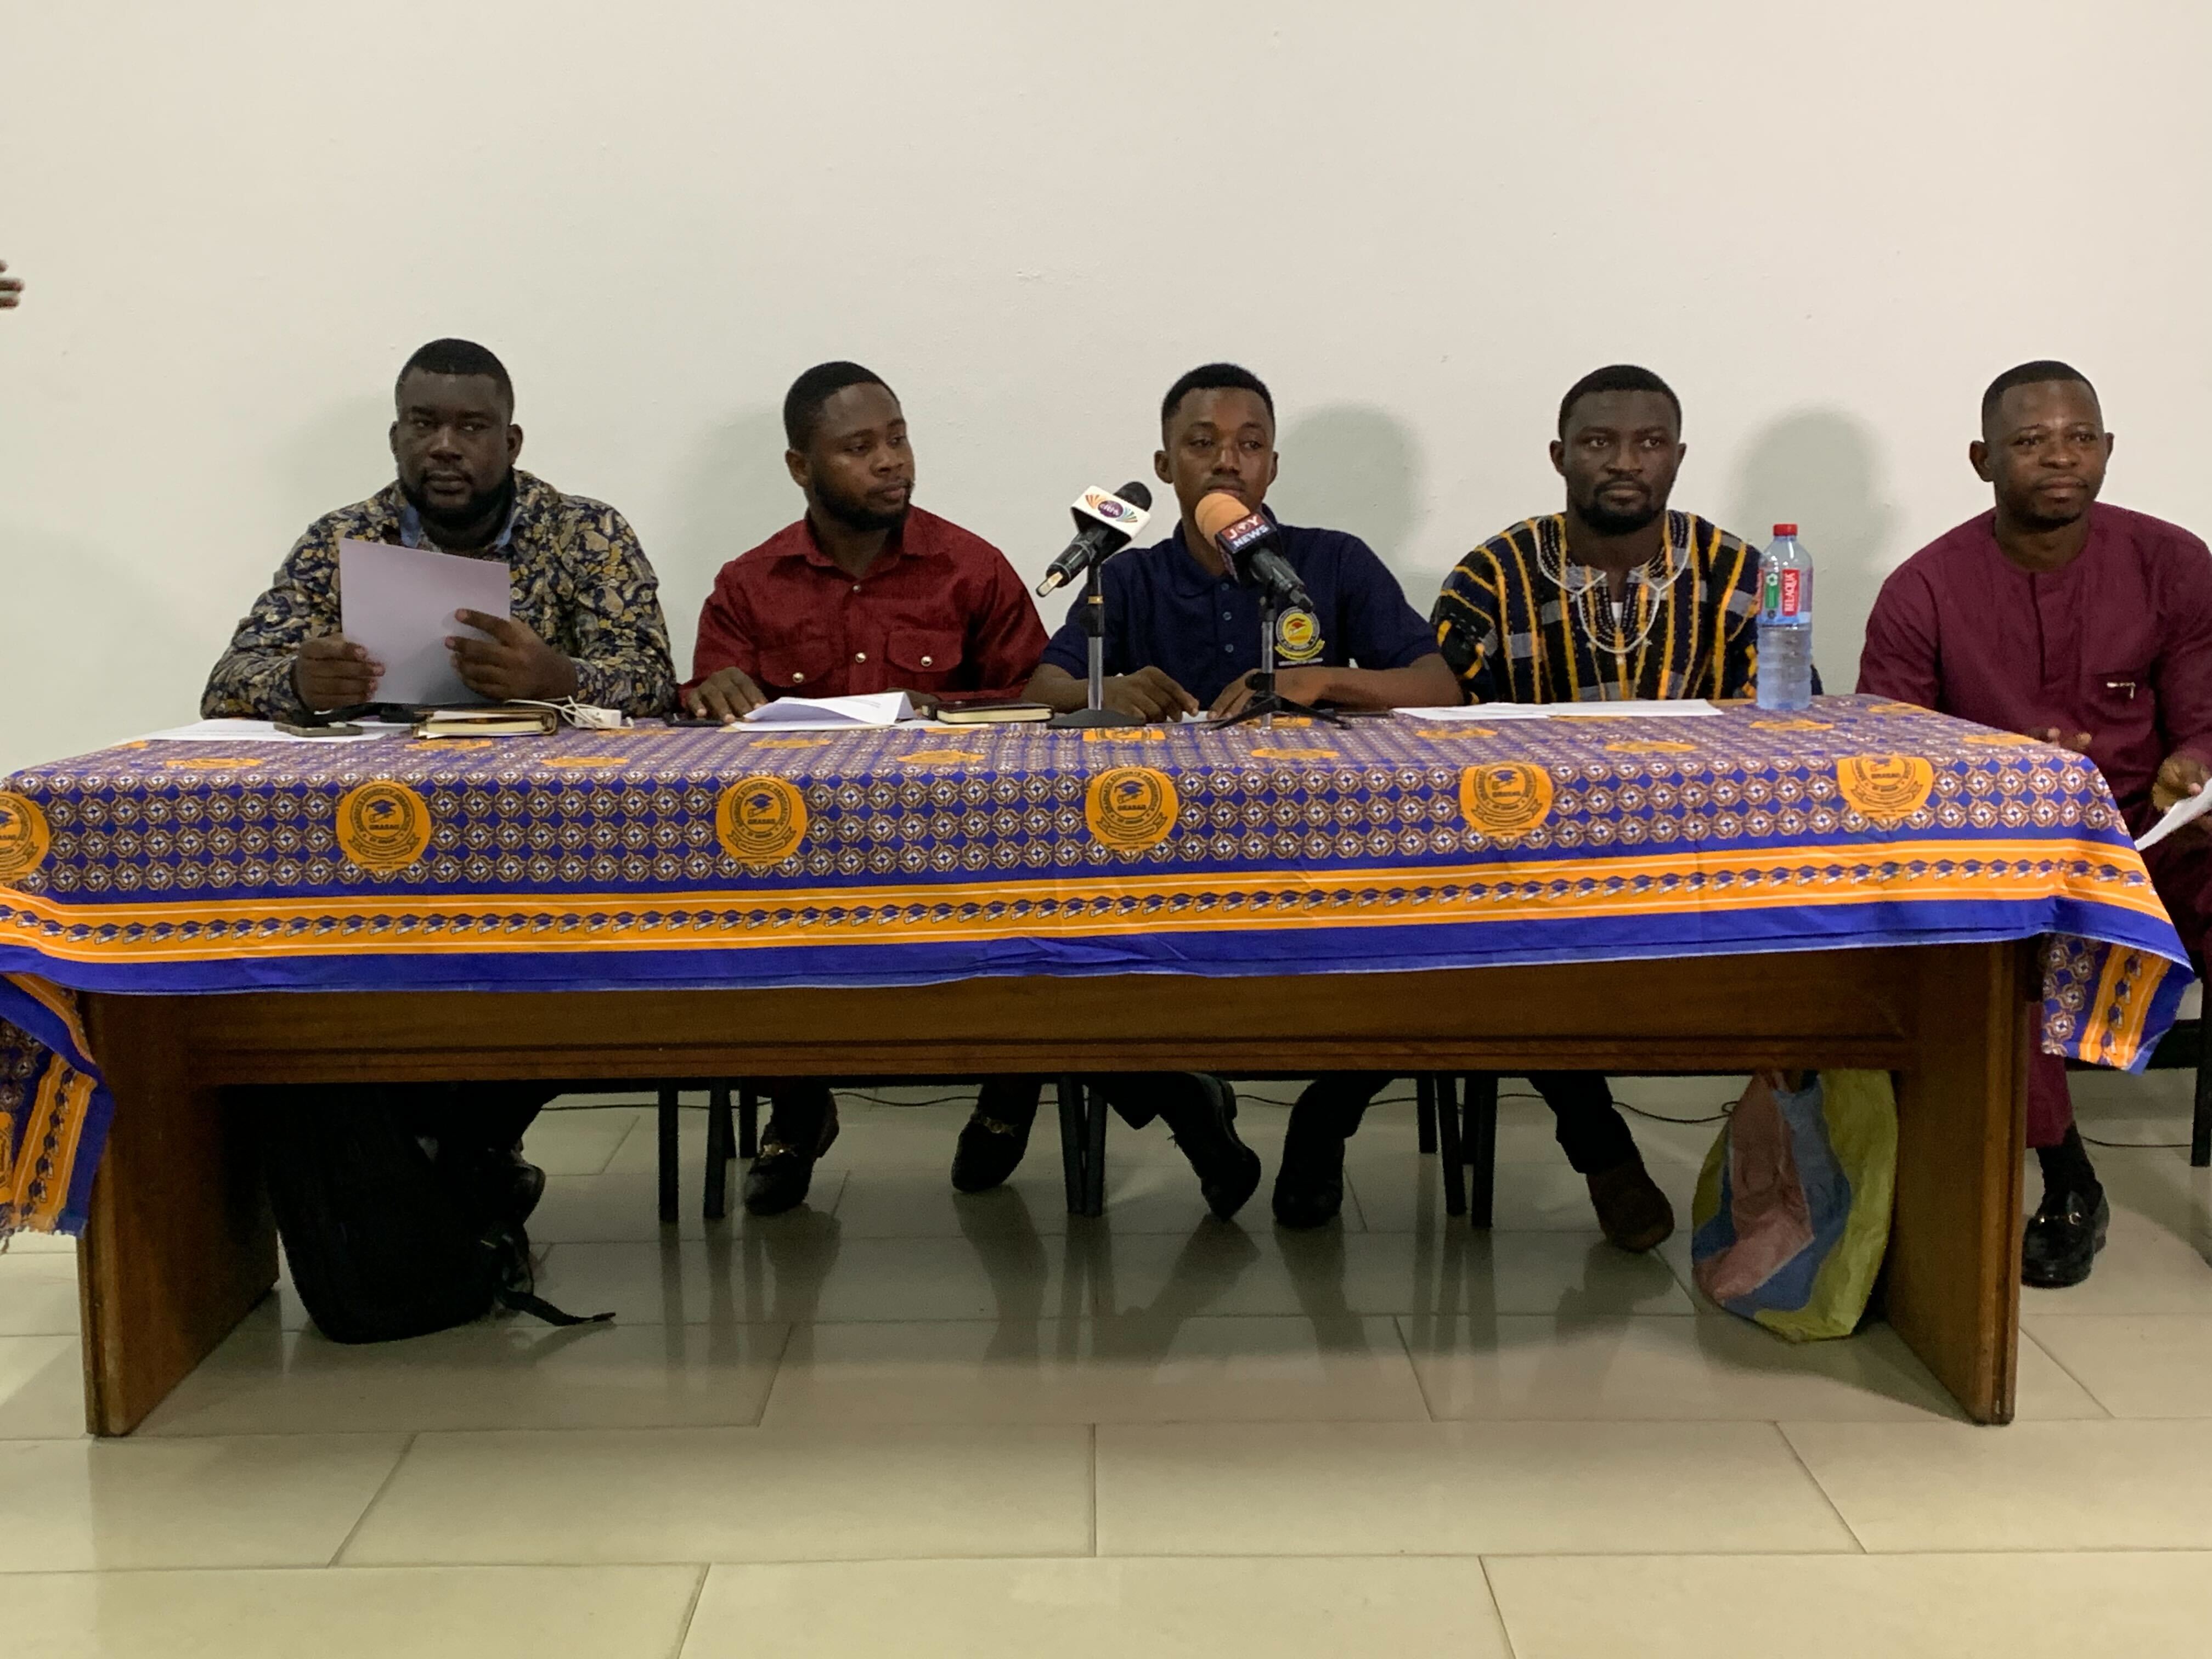 Leaders of Graduate students from various universities across Ghana